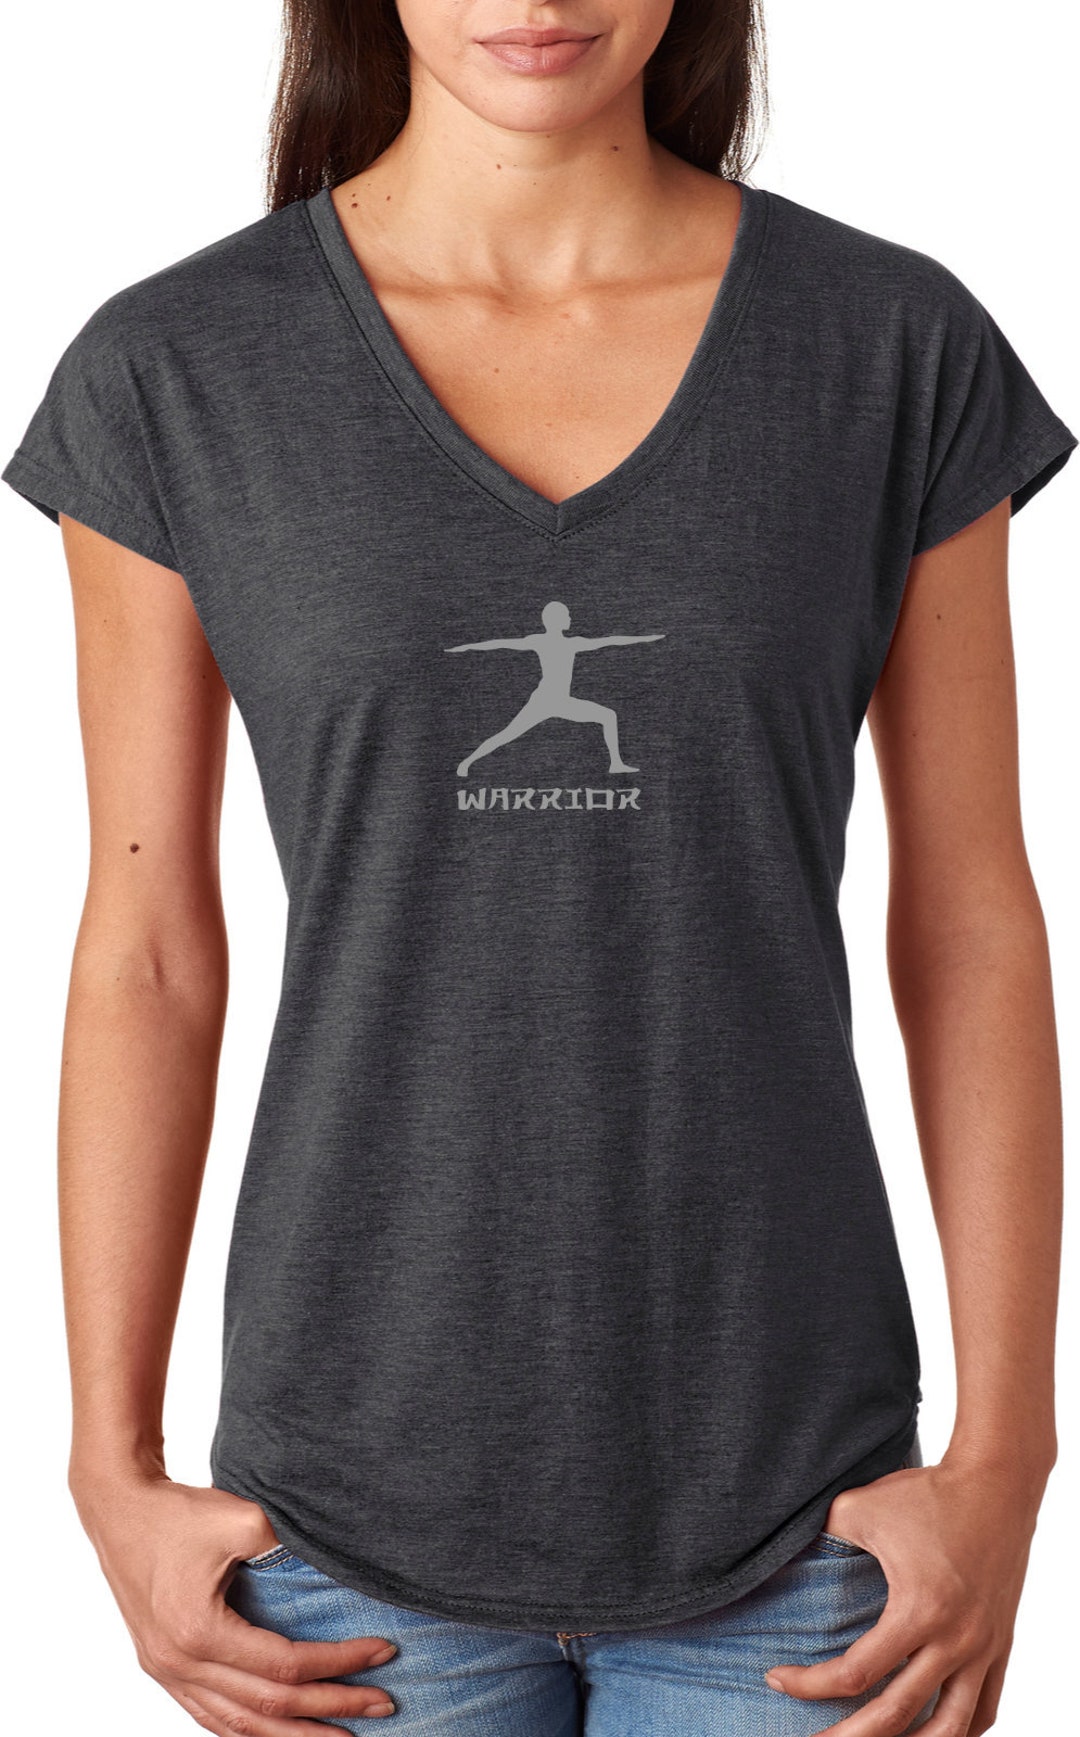 Warrior Pose Ladies Yoga Tri Blend V-neck Tee Shirt - Etsy